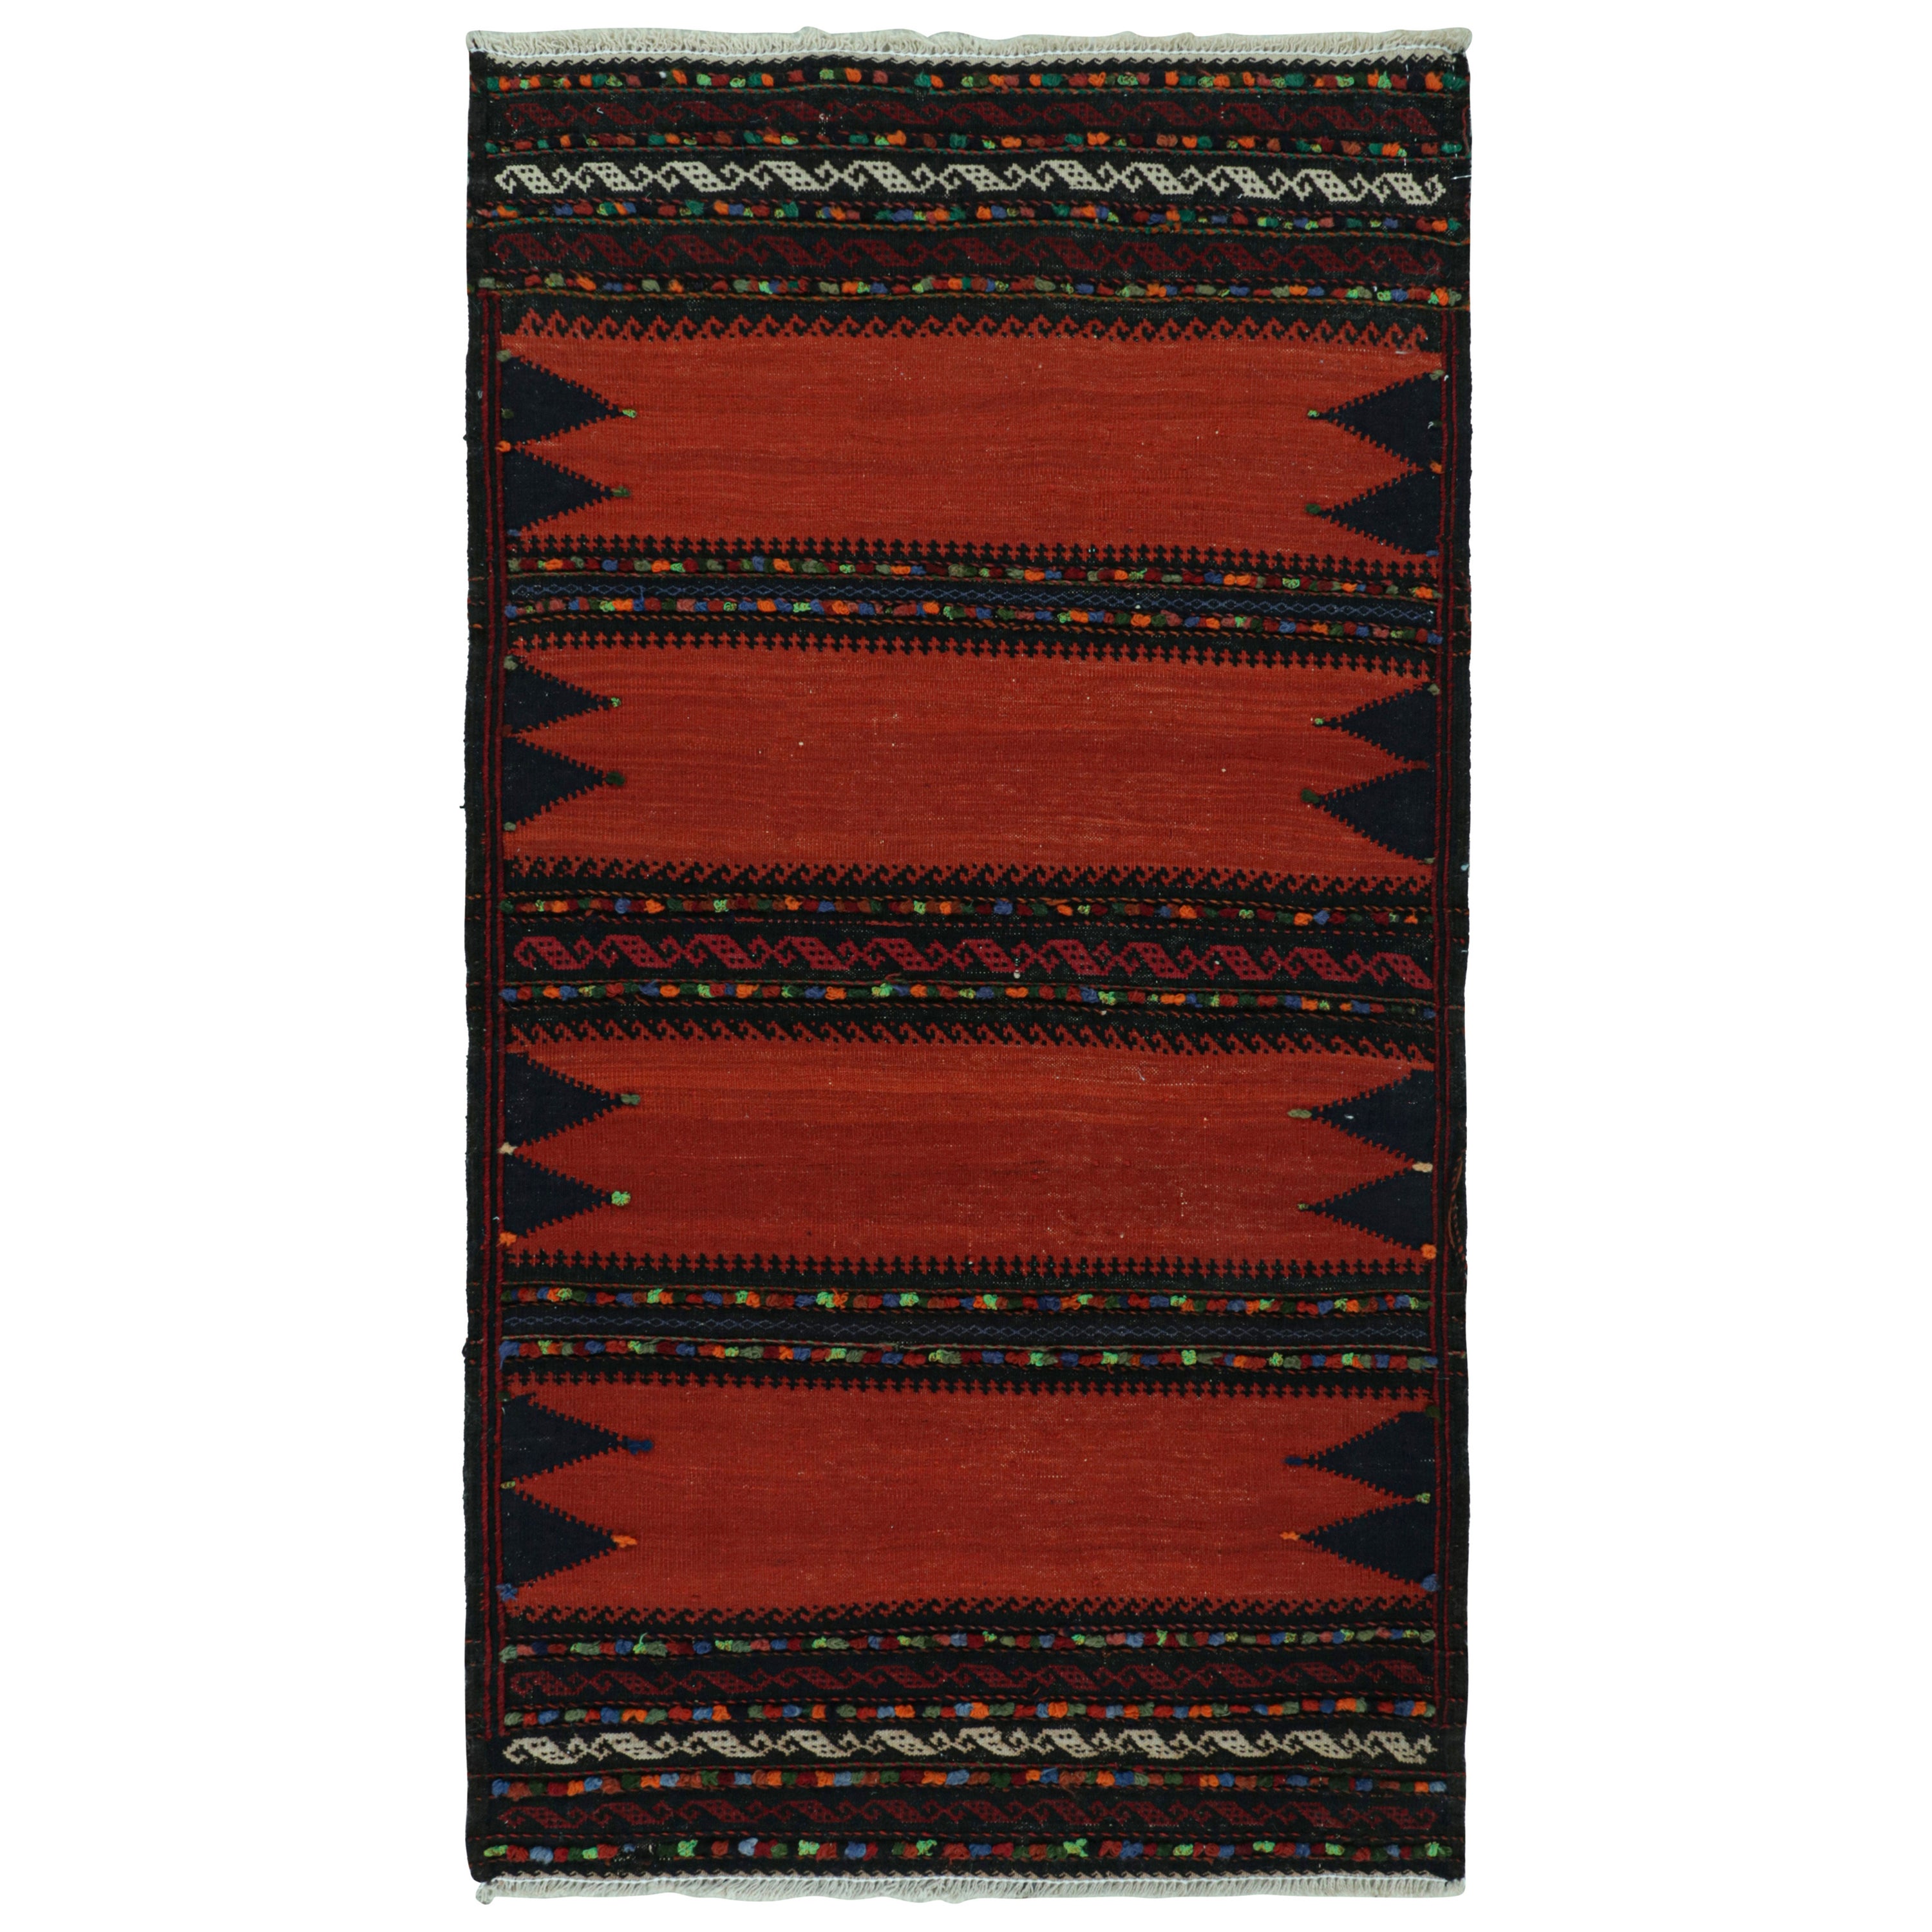 Vintage Afghan Kilim Scatter Rug, with Geometric Patterns from Rug & Kilim